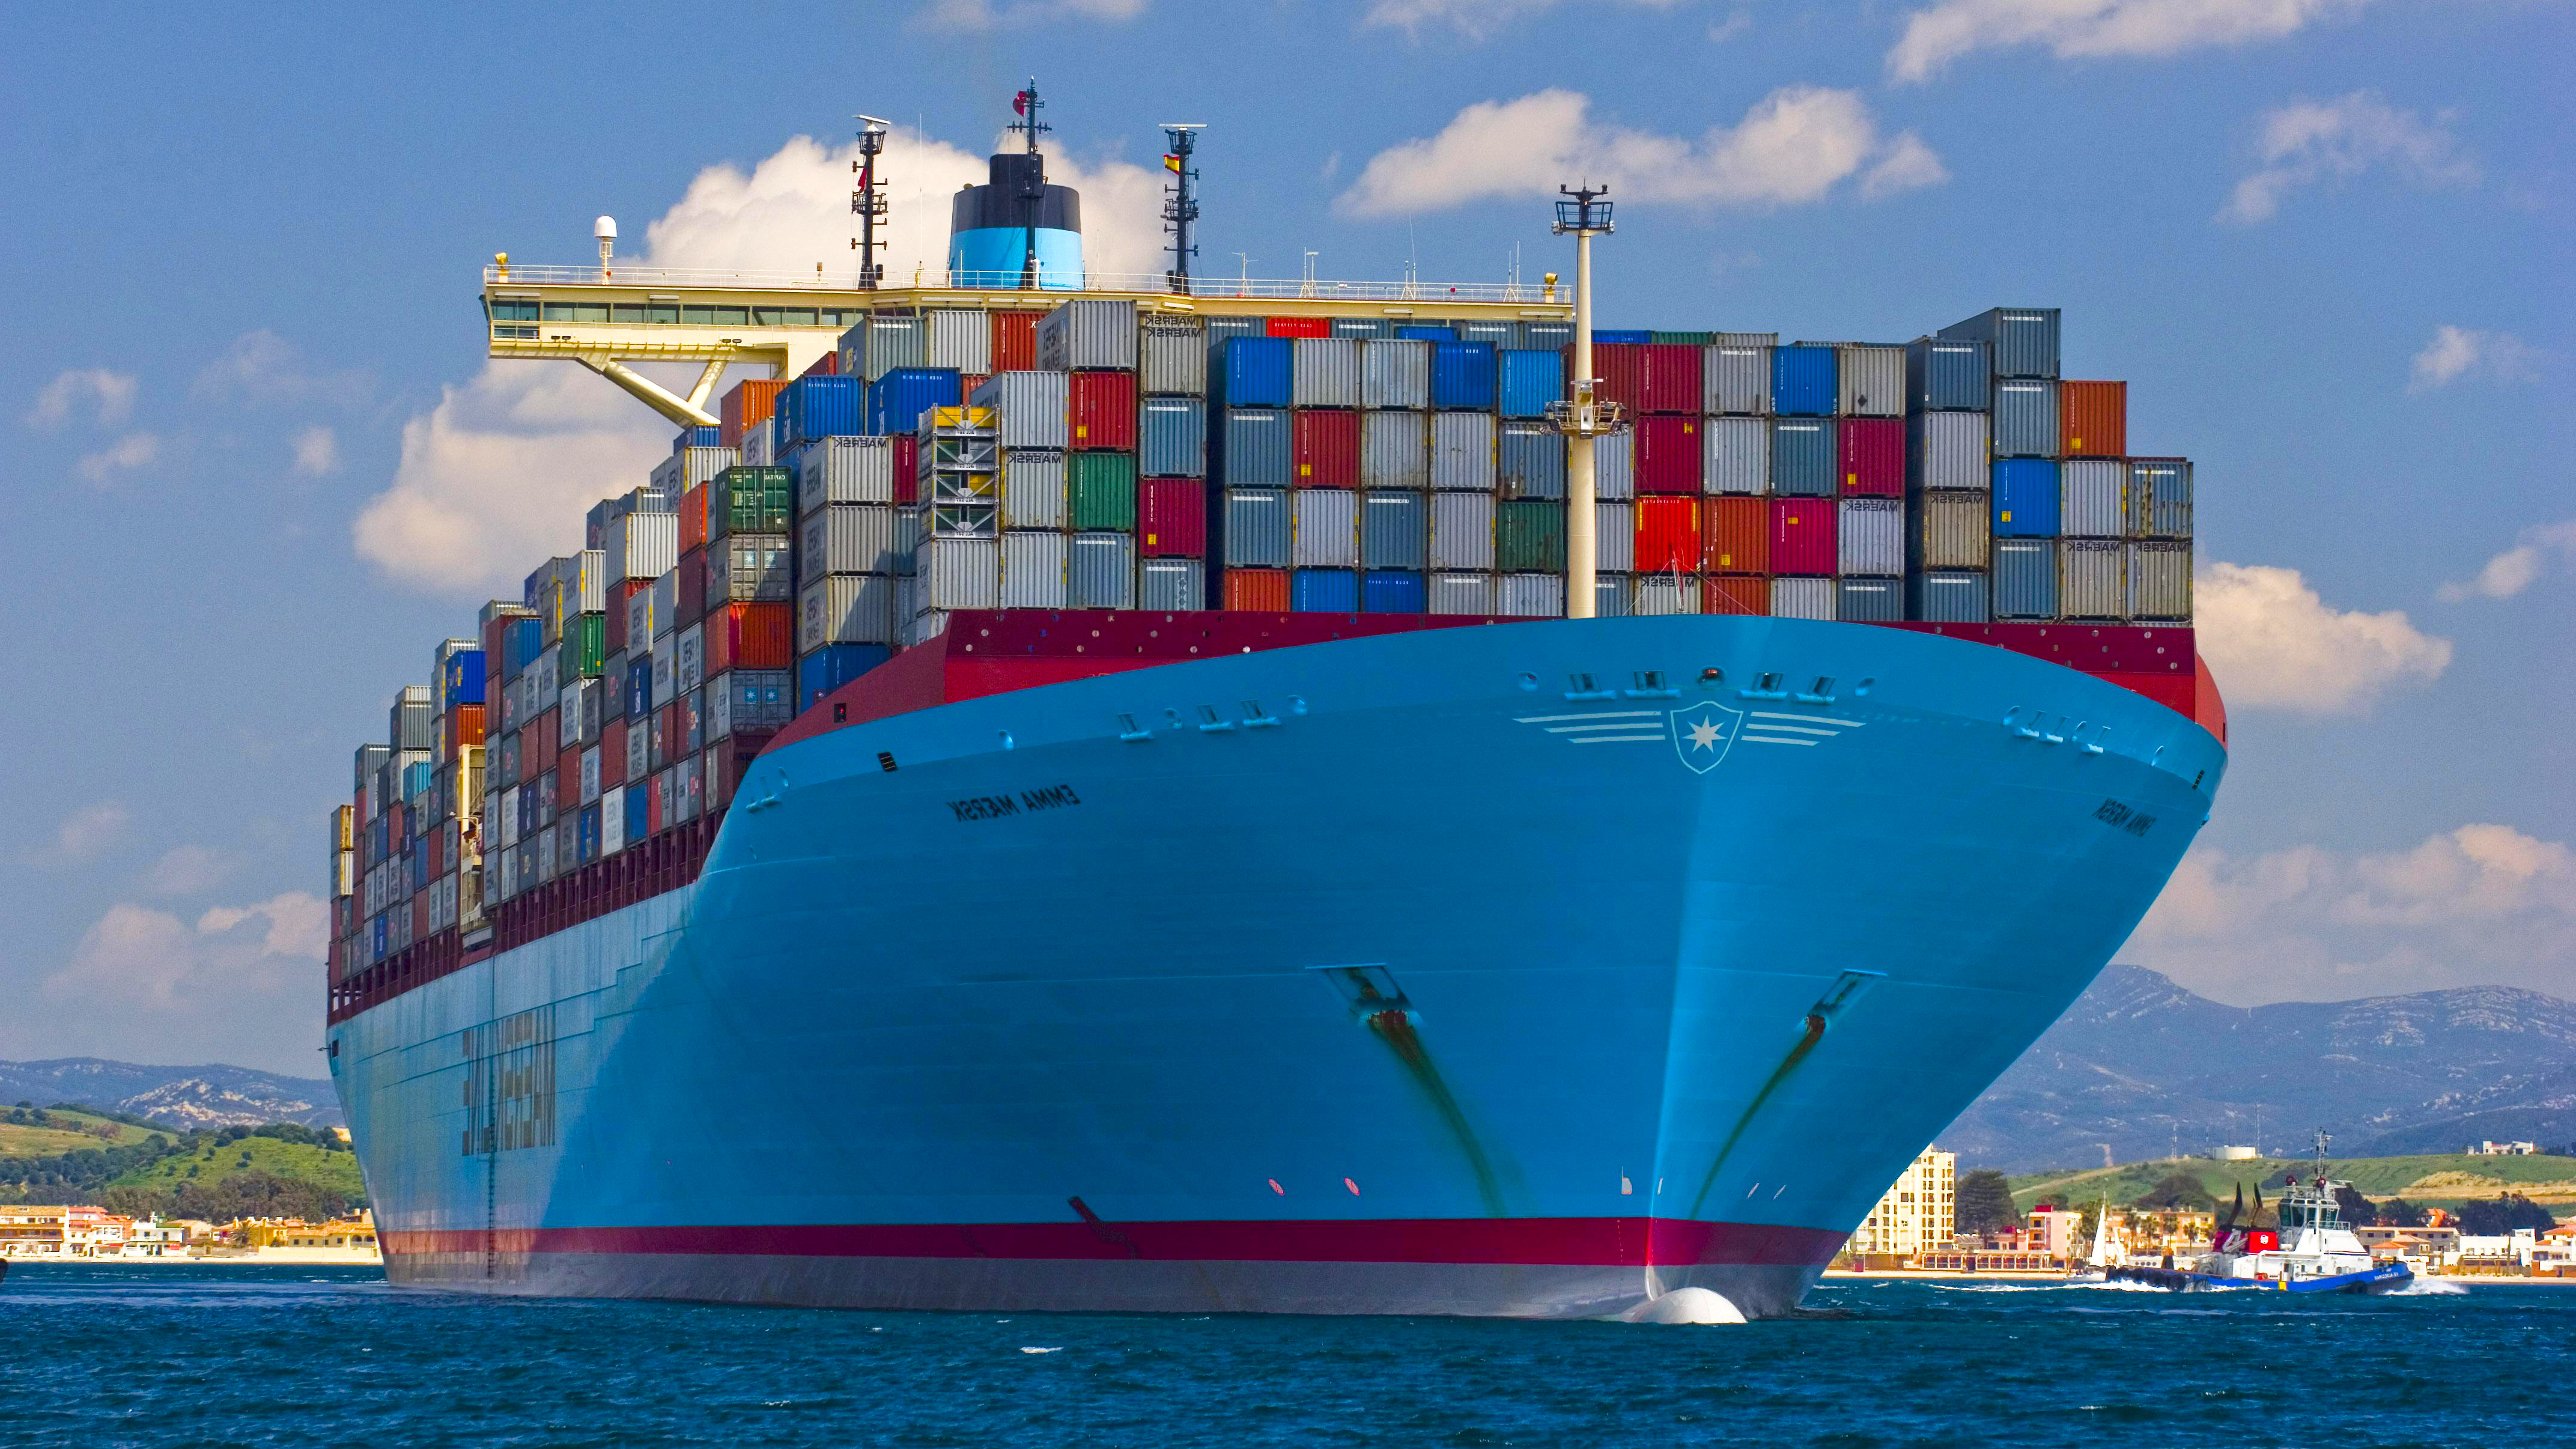 ships-containers-maersk-line-emma-teherhajo-hajozashu